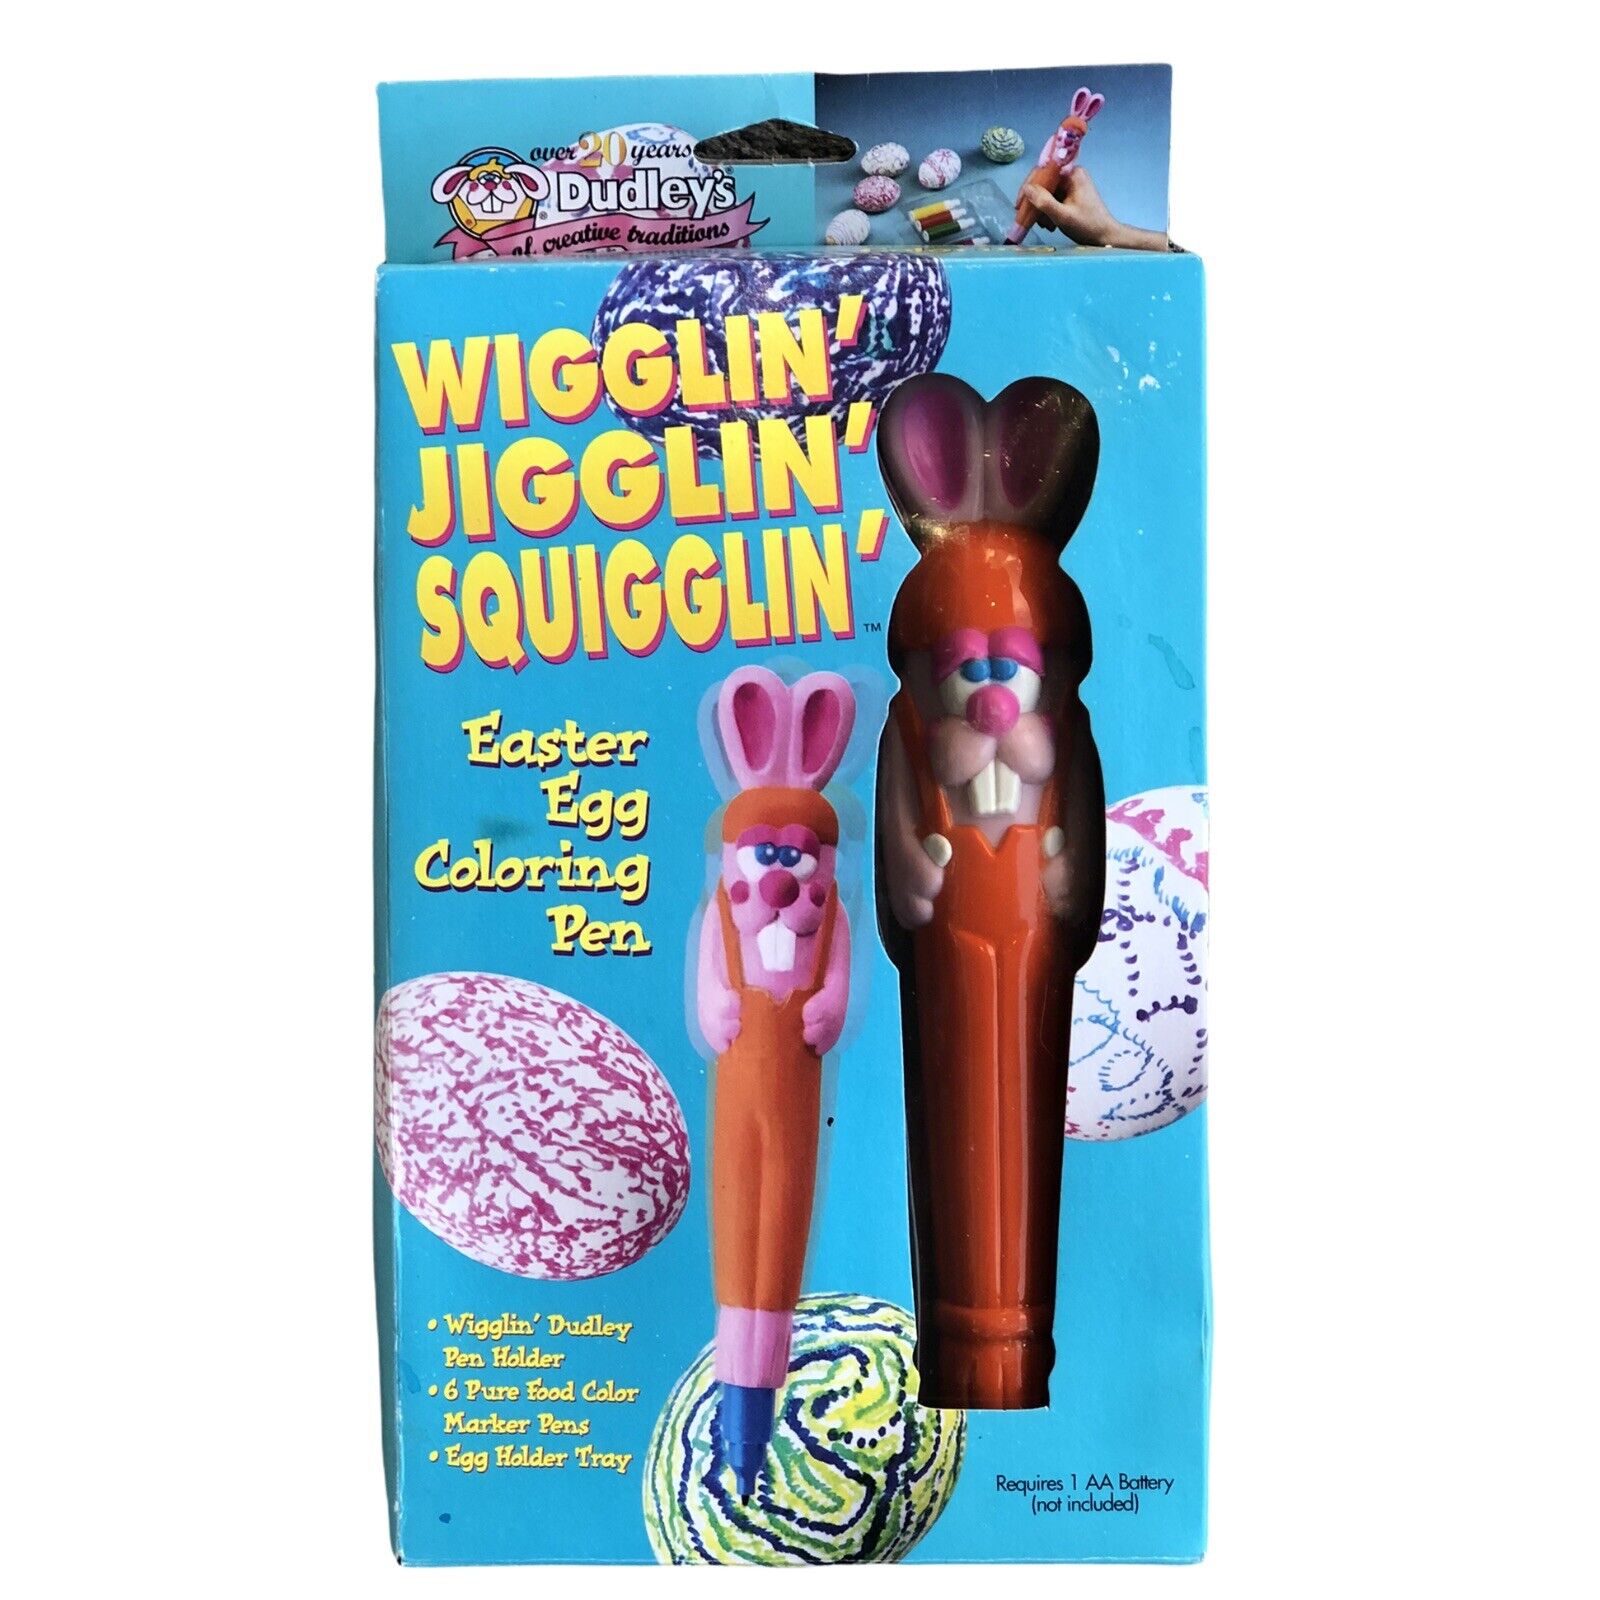 Dudley’s Easter Egg Wigglin Jigglin Squigglin Coloring Pen 1997 Vintage NIB